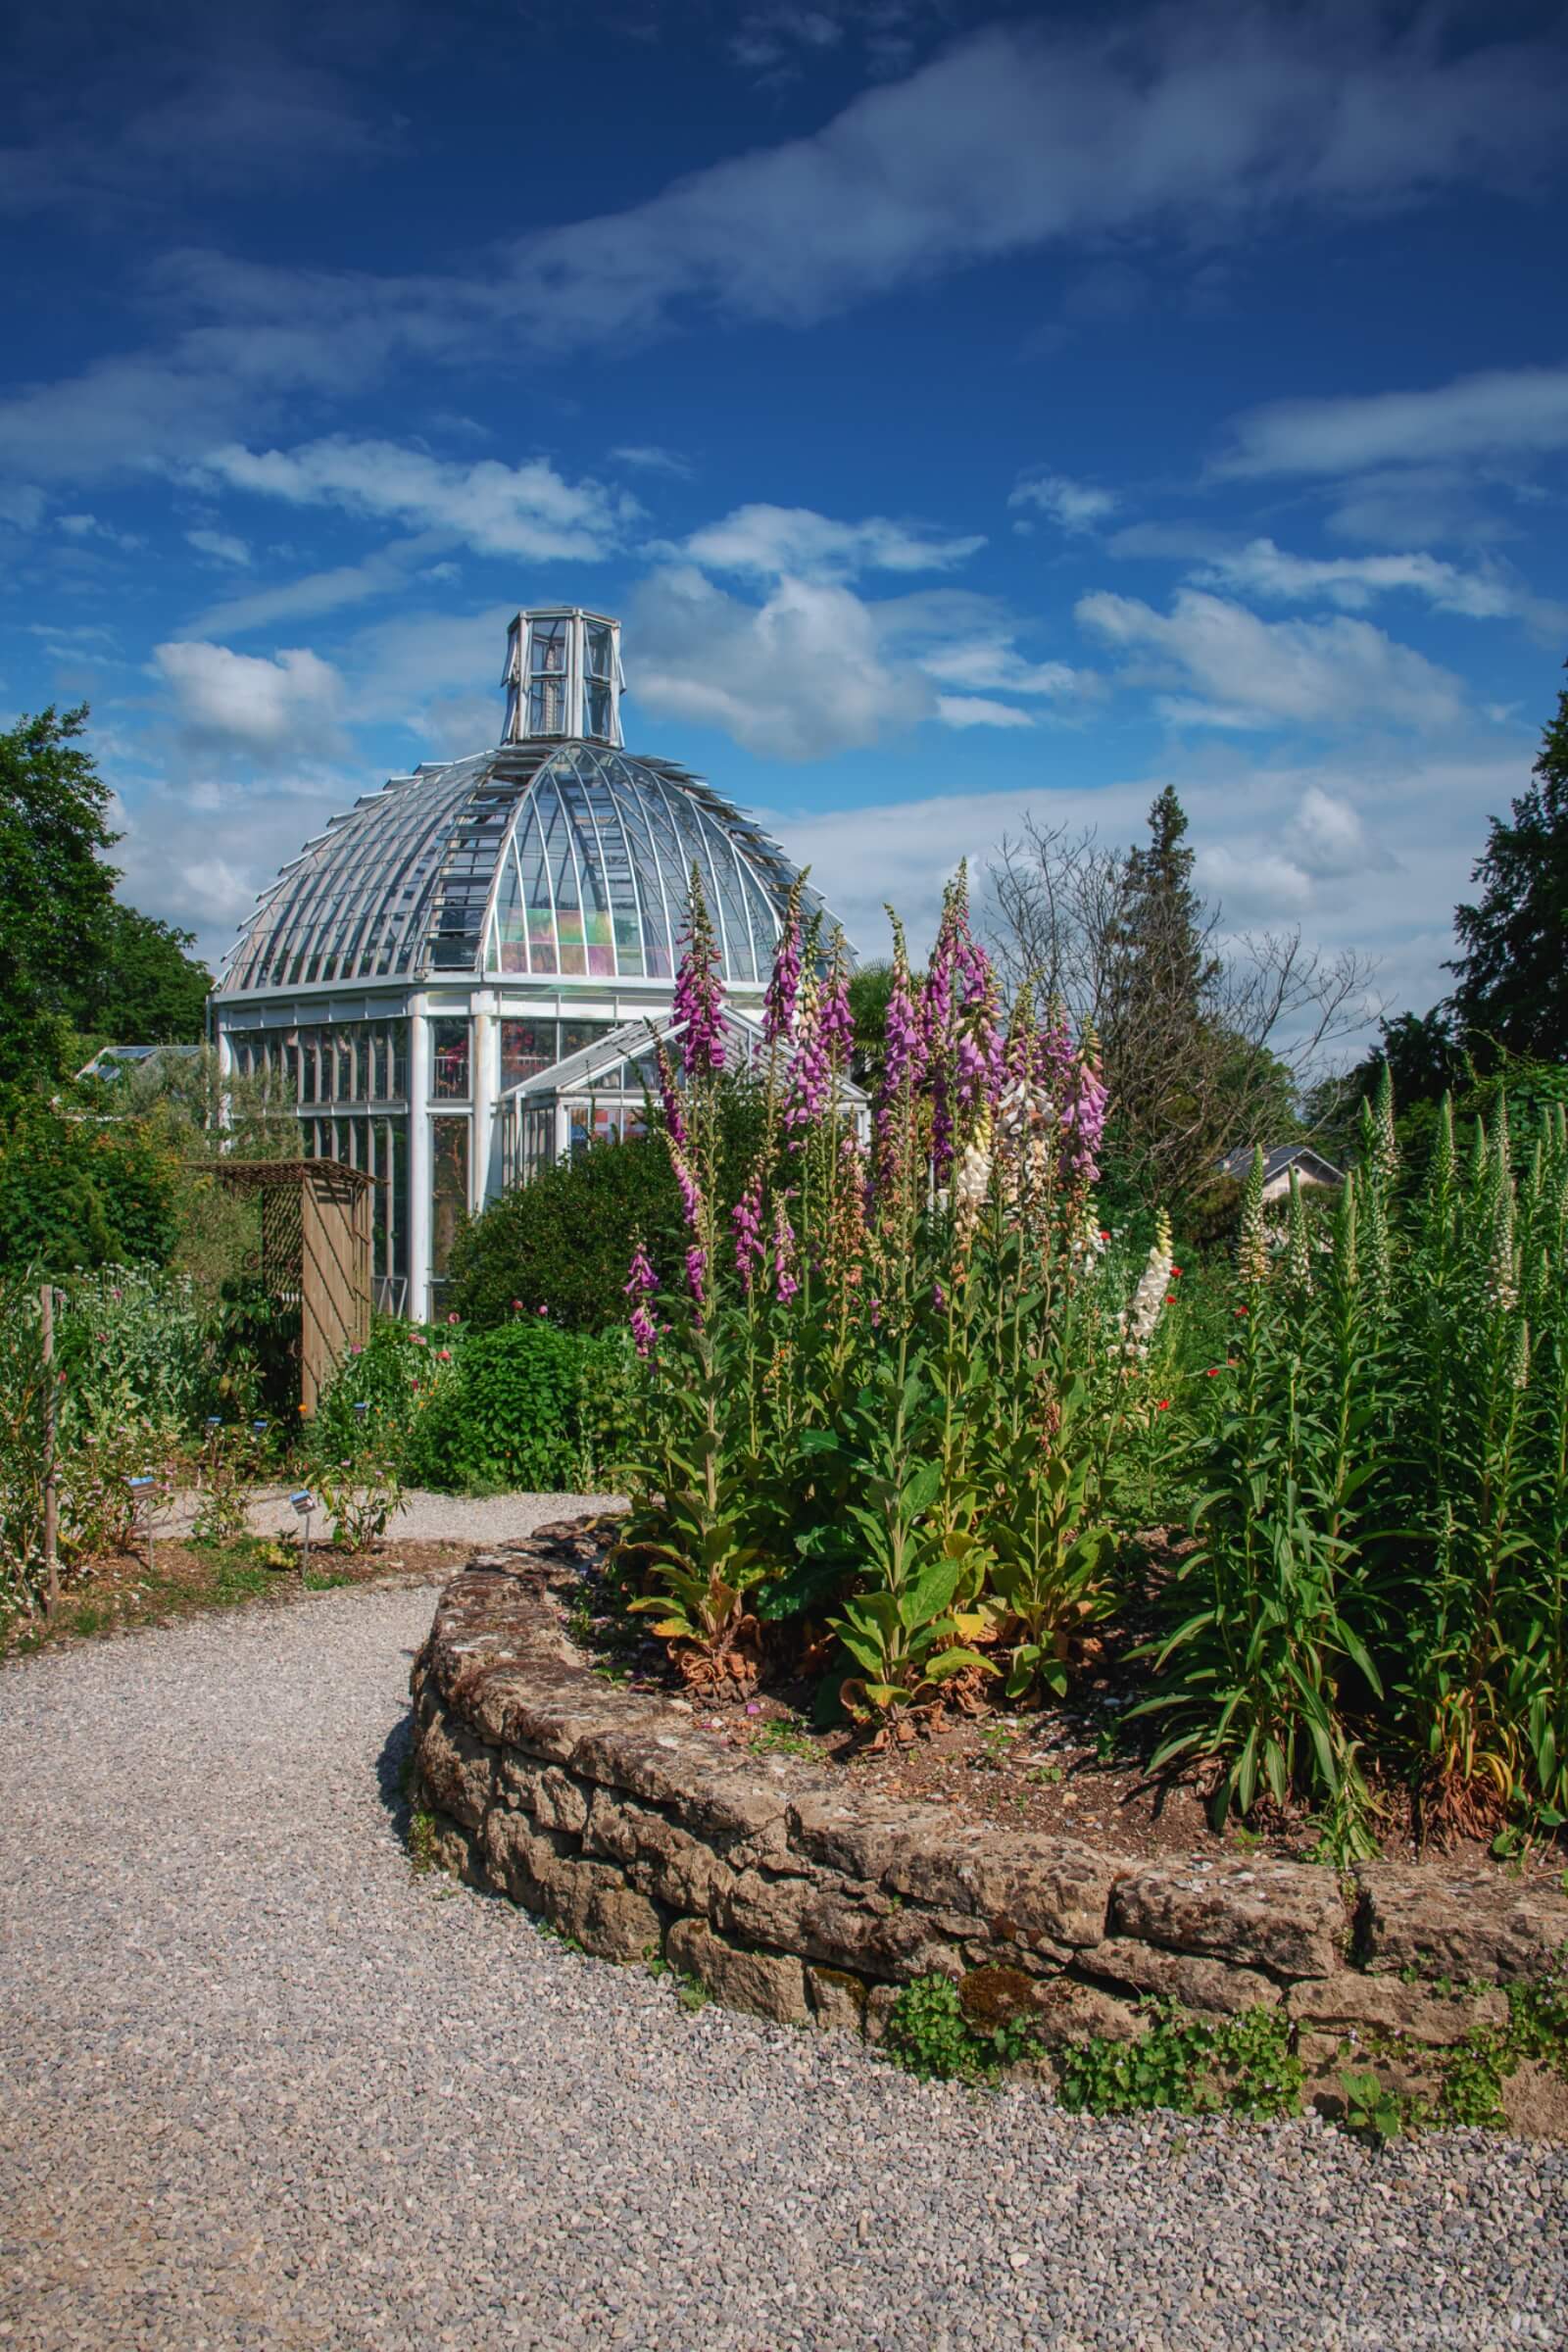 Image of Jardin Botaniques by Mathew Browne